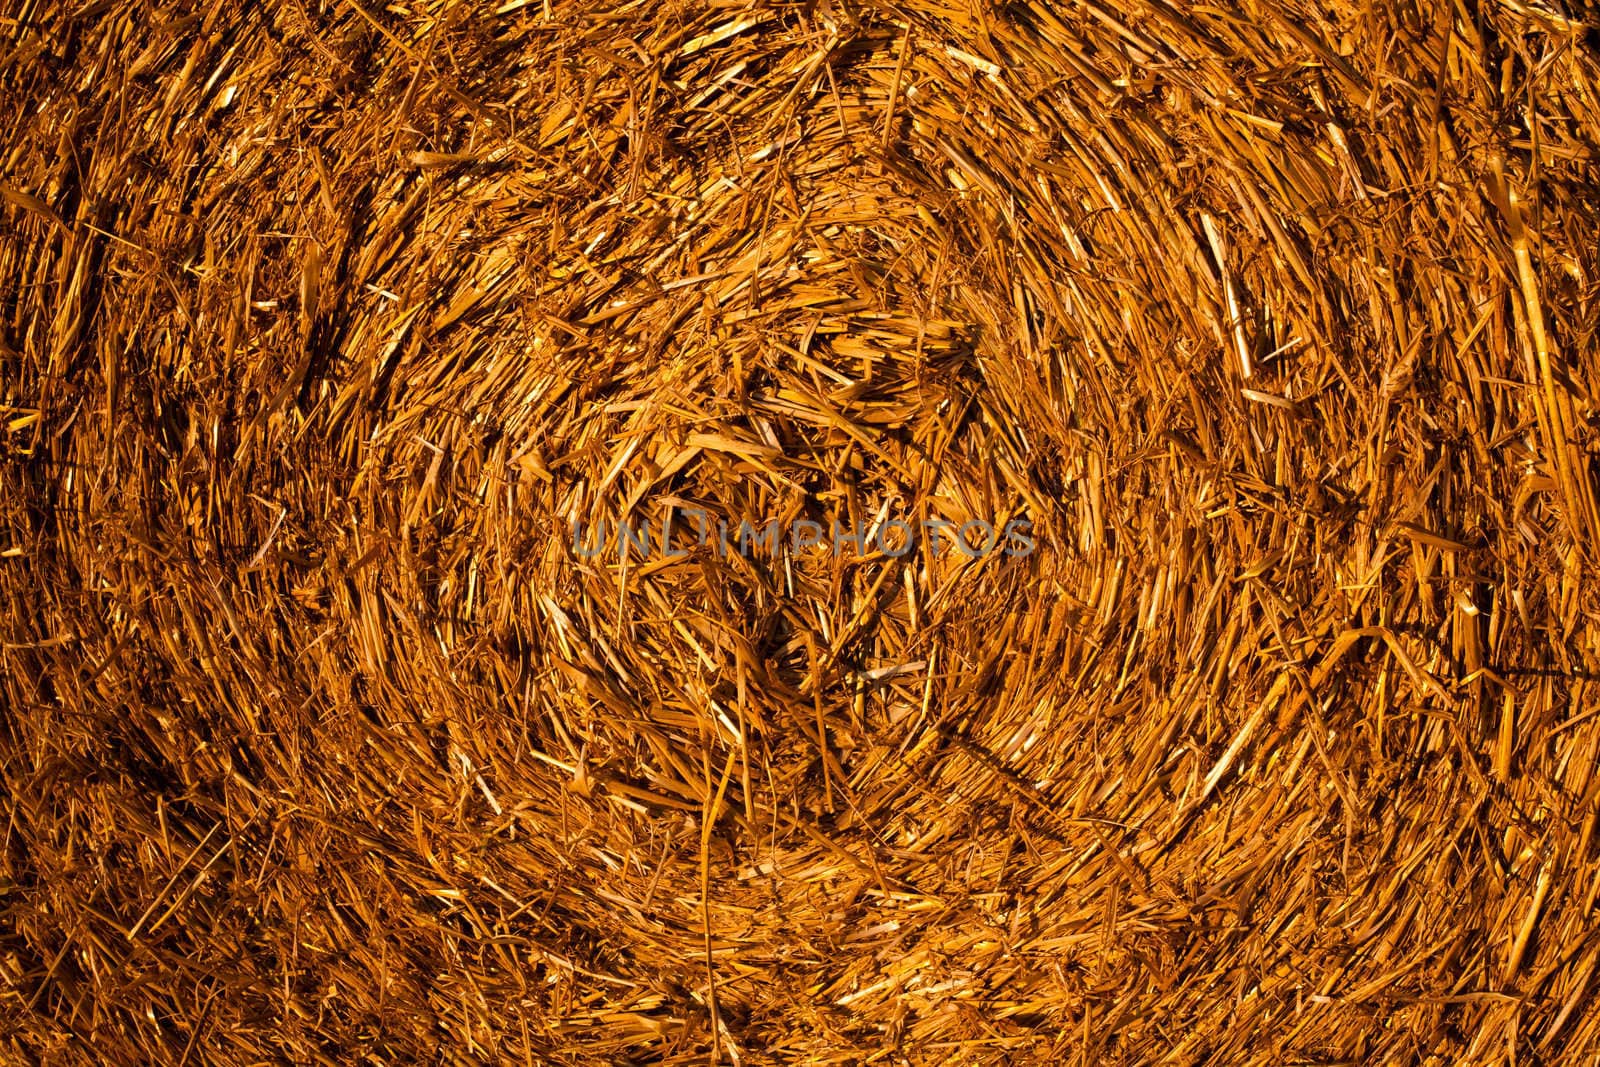 View of round wheat straw bale